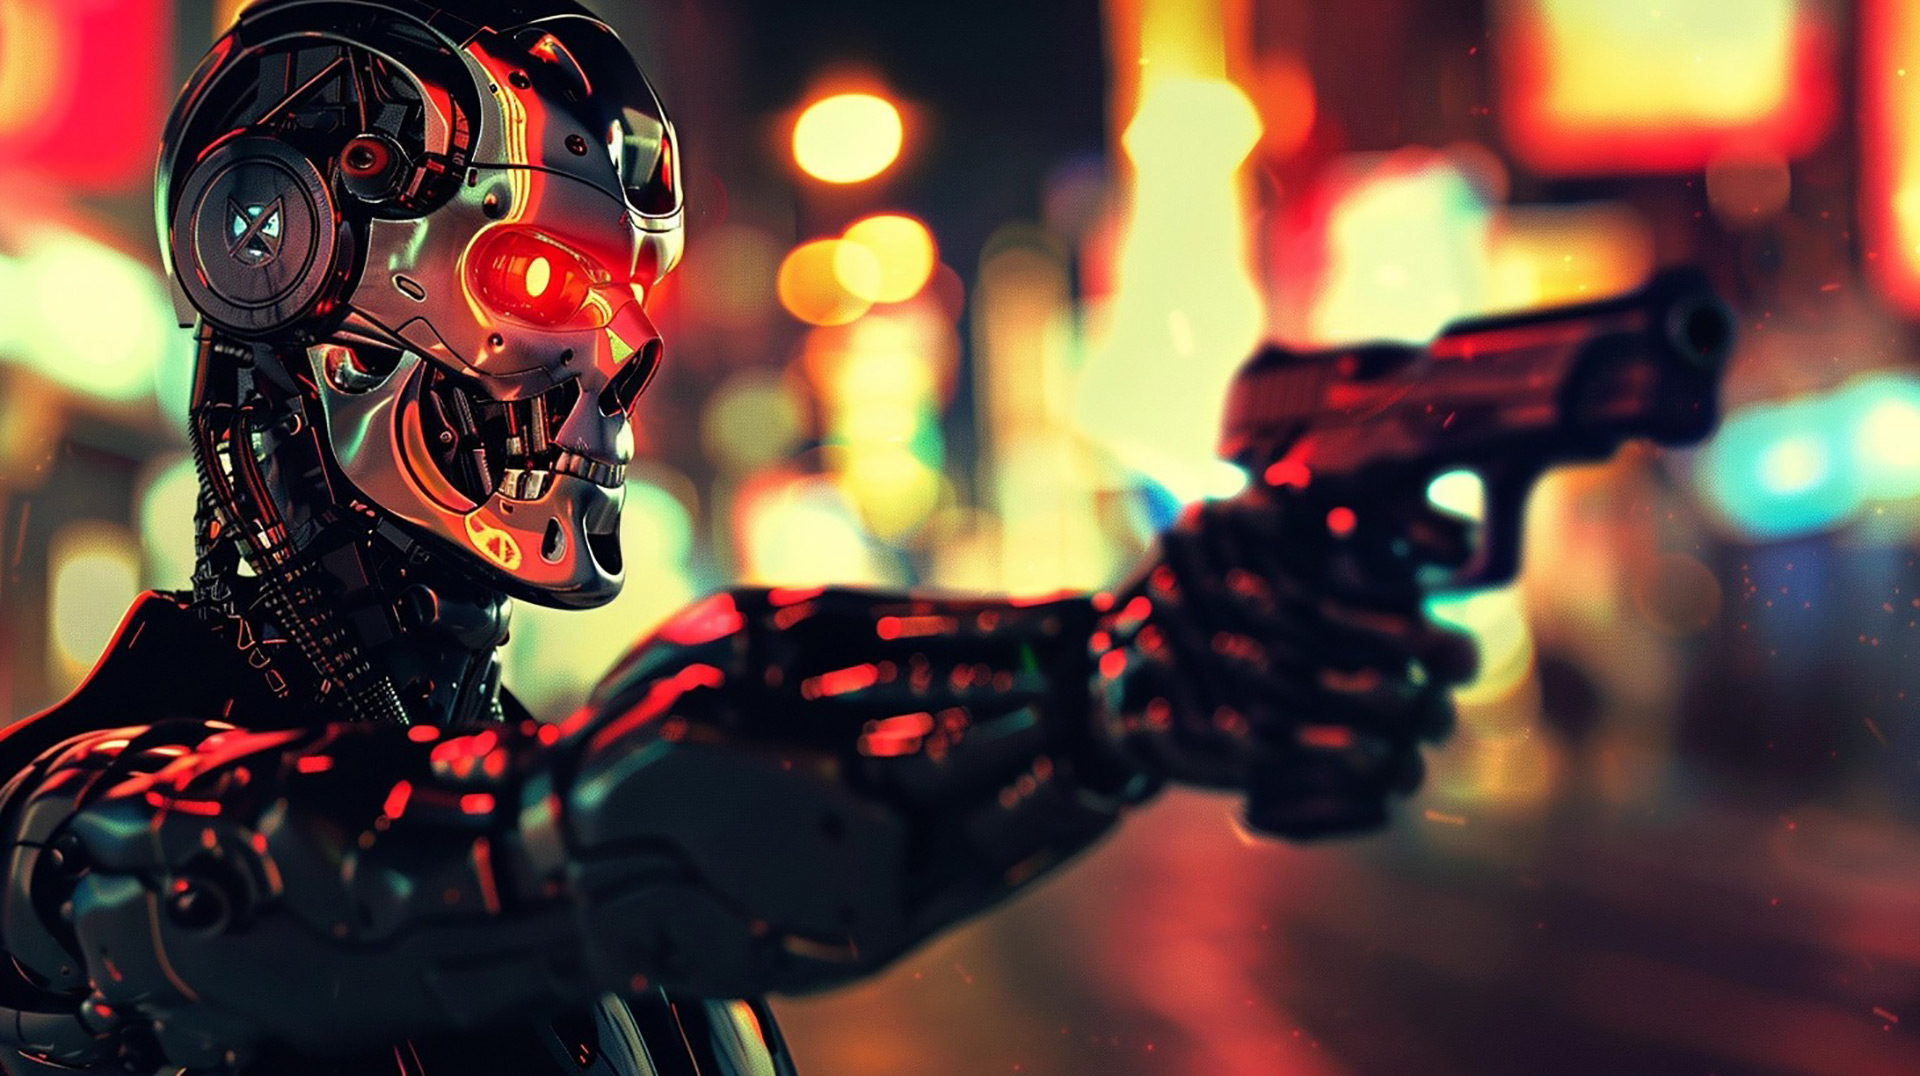 Neon Mafia: Stylish Robot Gangster Wallpapers for Your Desktop